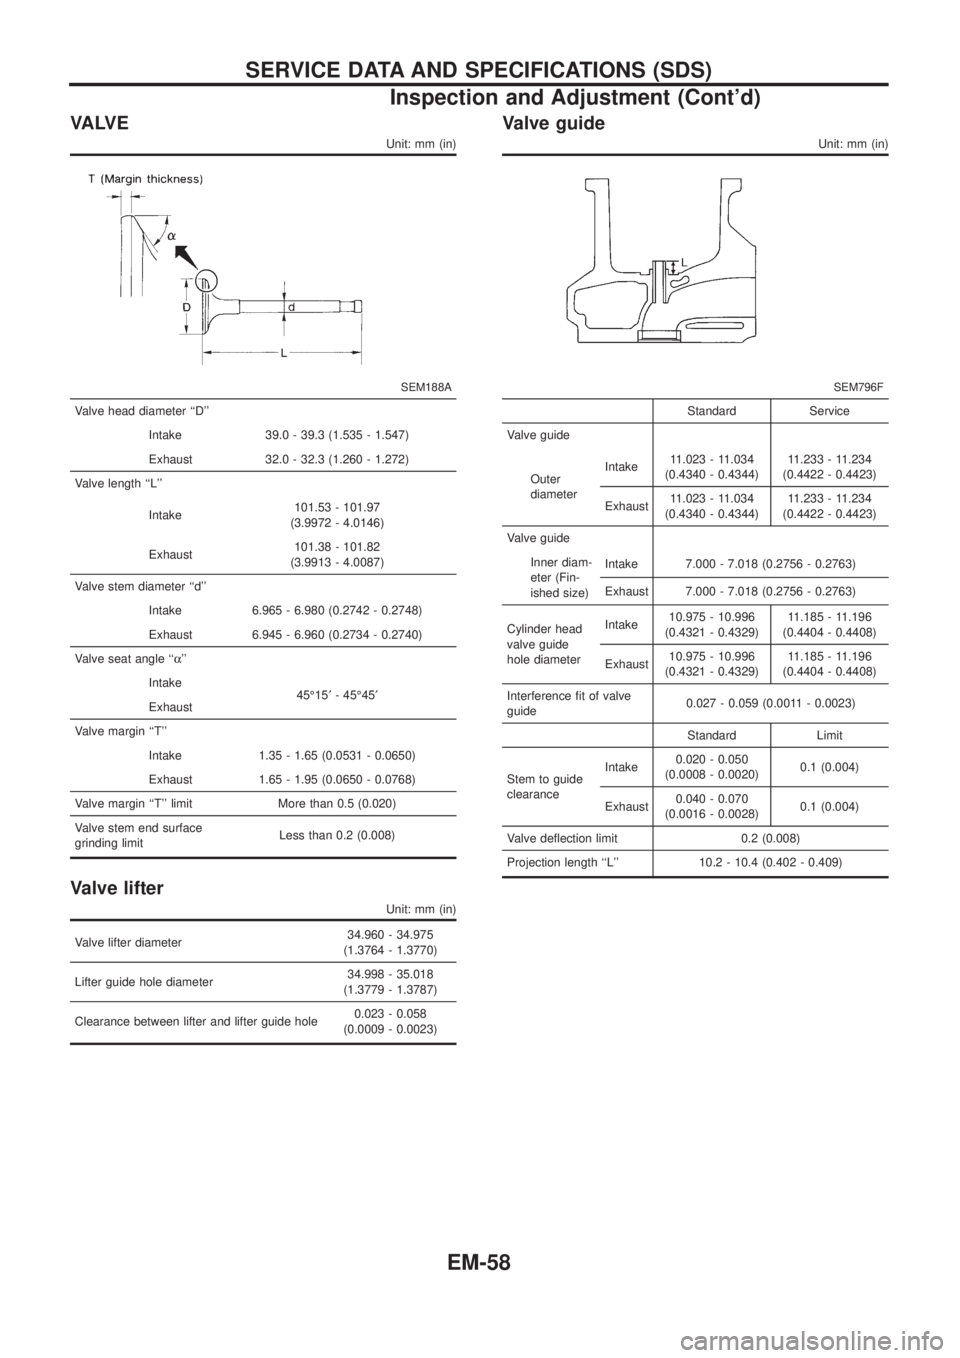 NISSAN PATROL 2006  Service Manual VA LV E
Unit: mm (in)
SEM188A
Valve head diameter ``D
Intake 39.0 - 39.3 (1.535 - 1.547)
Exhaust 32.0 - 32.3 (1.260 - 1.272)
Valve length ``L
Intake101.53 - 101.97
(3.9972 - 4.0146)
Exhaust101.38 